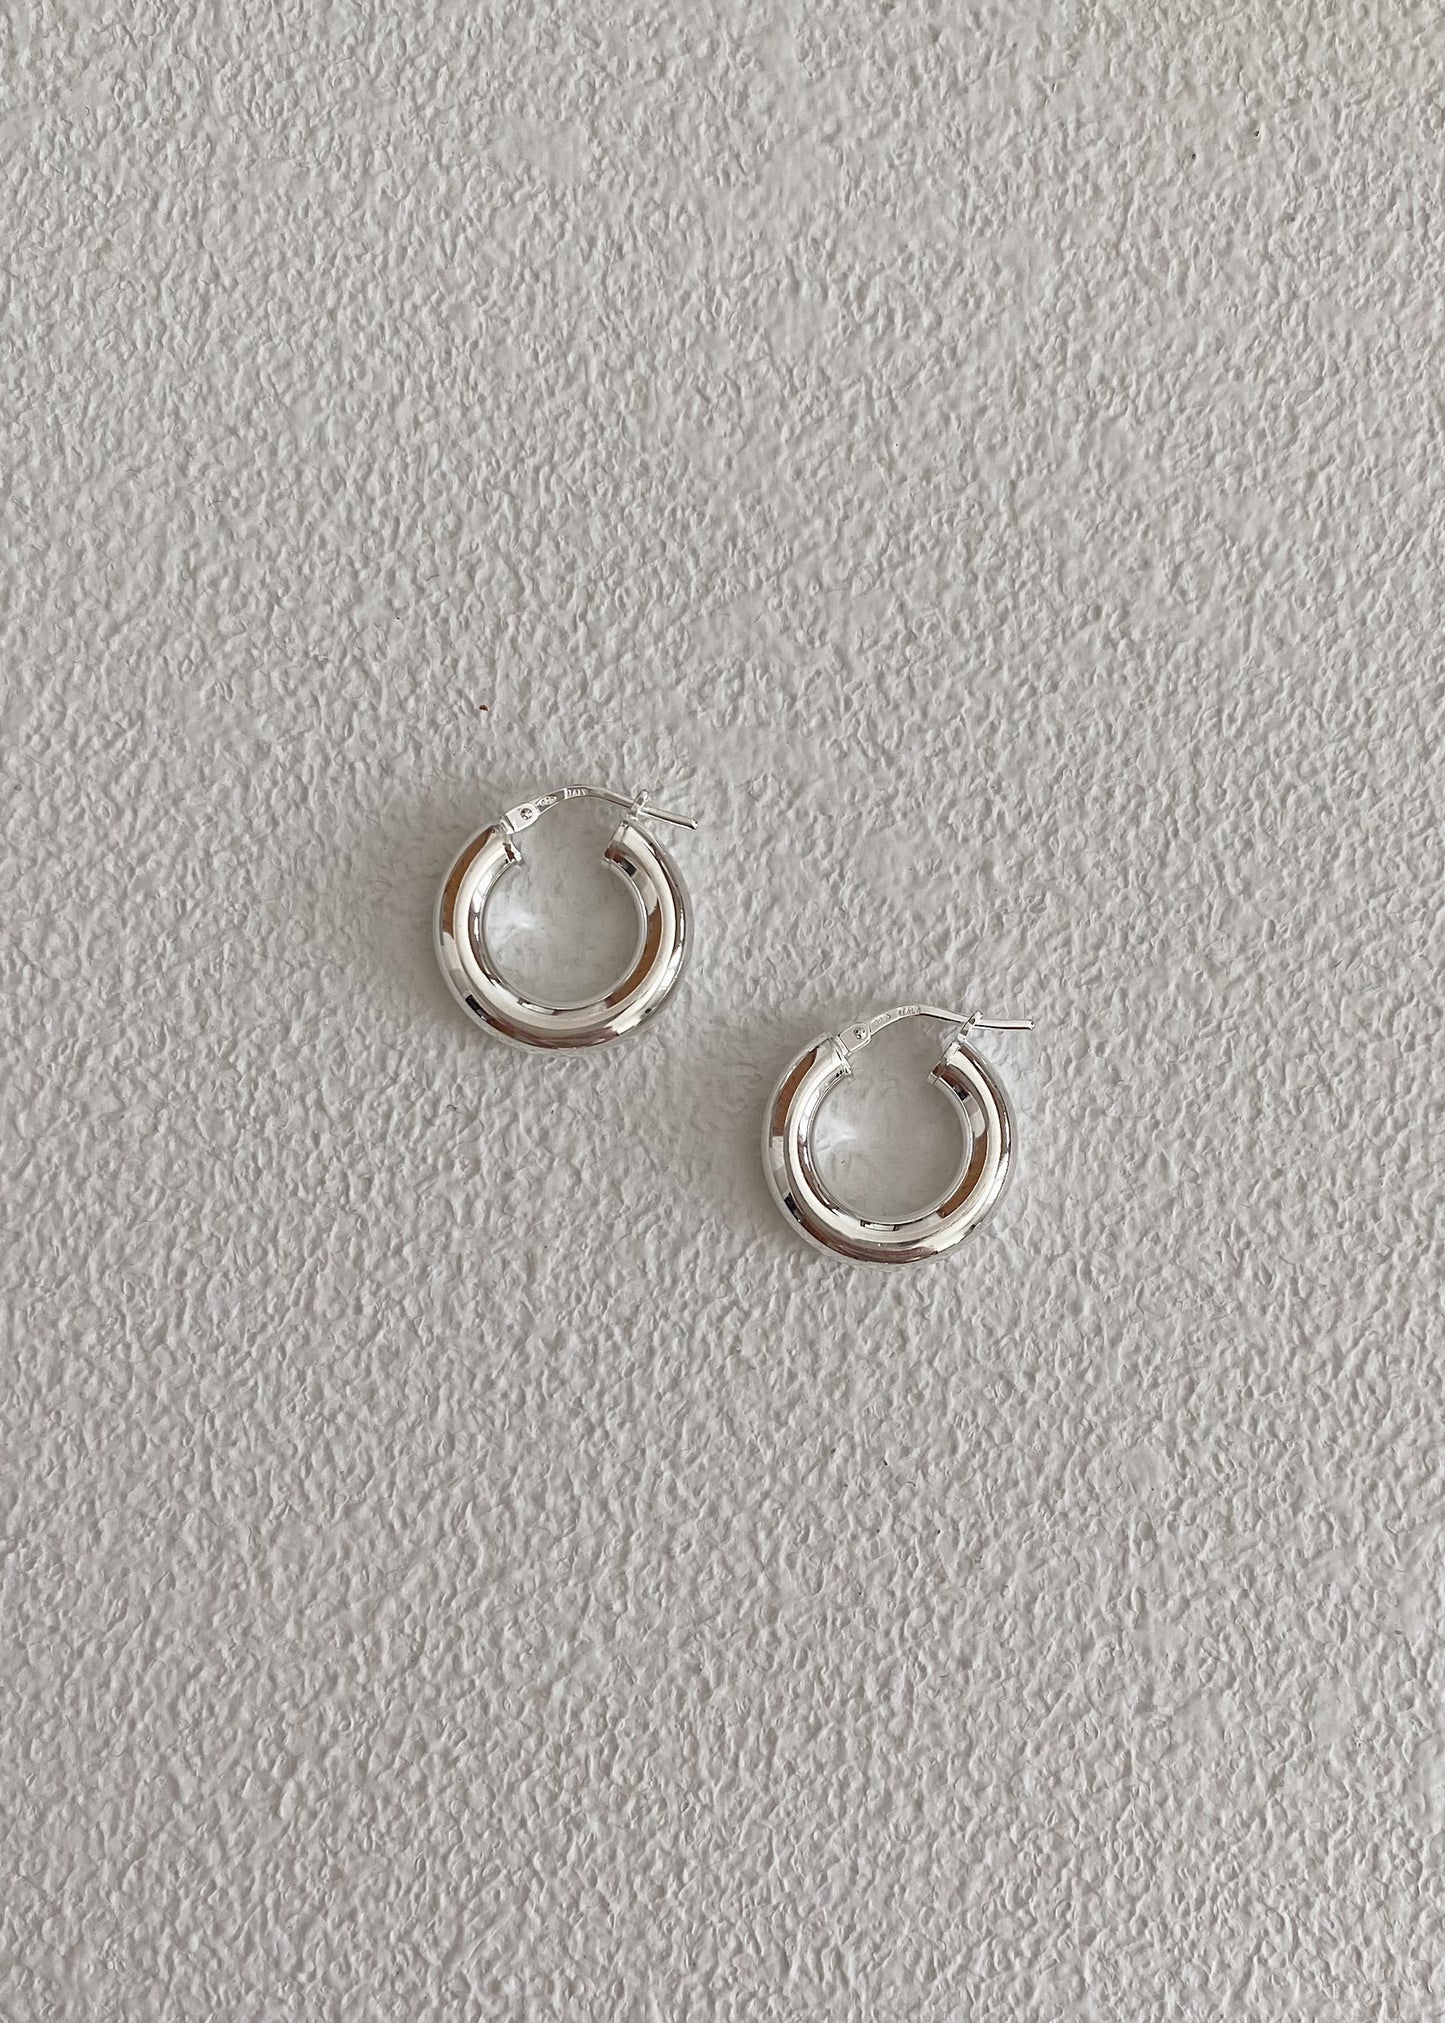 Silver hoops earrings